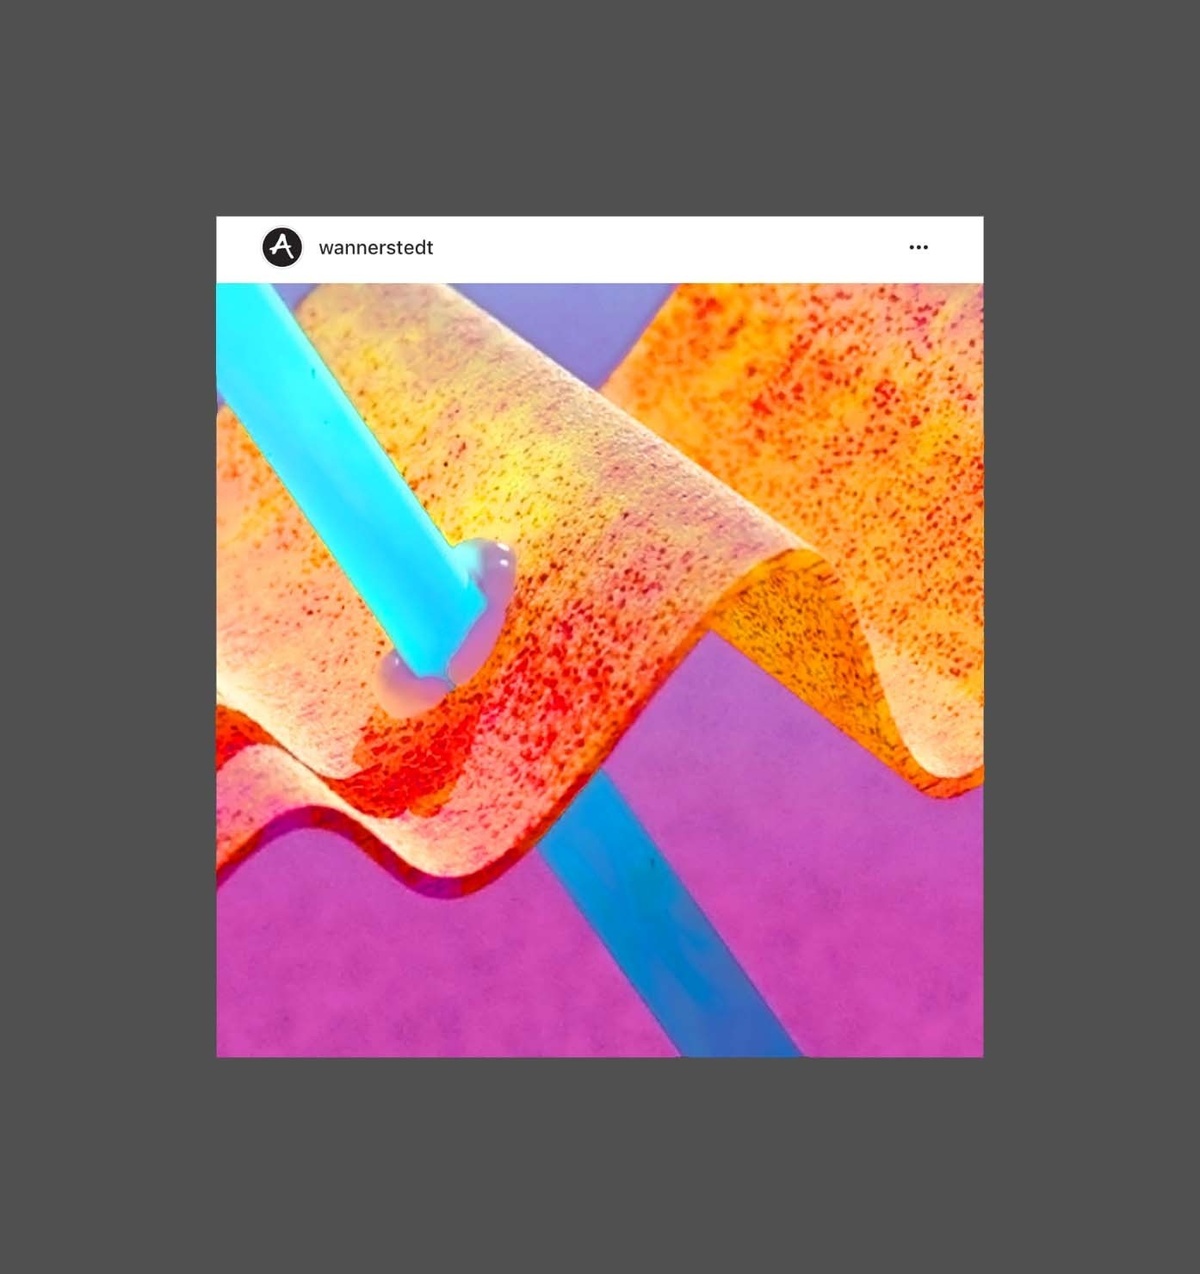 Instagram image of wavy orange glass in front of magenta background